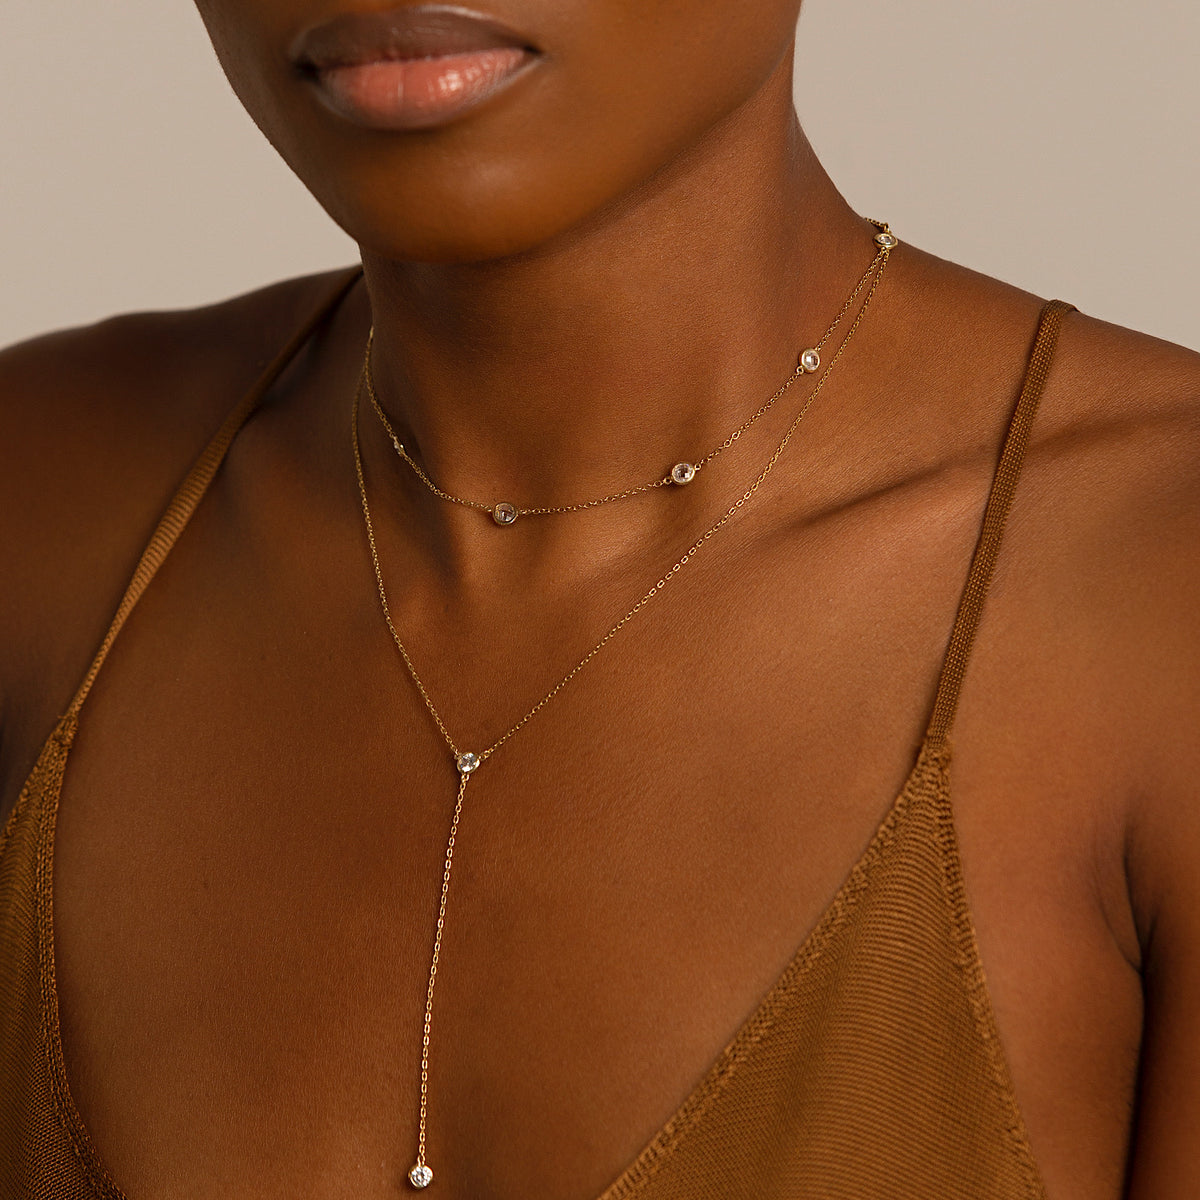 Gold Crystal Y Lariat Necklace, Minimal Dainty Jewelry – AMYO Jewelry